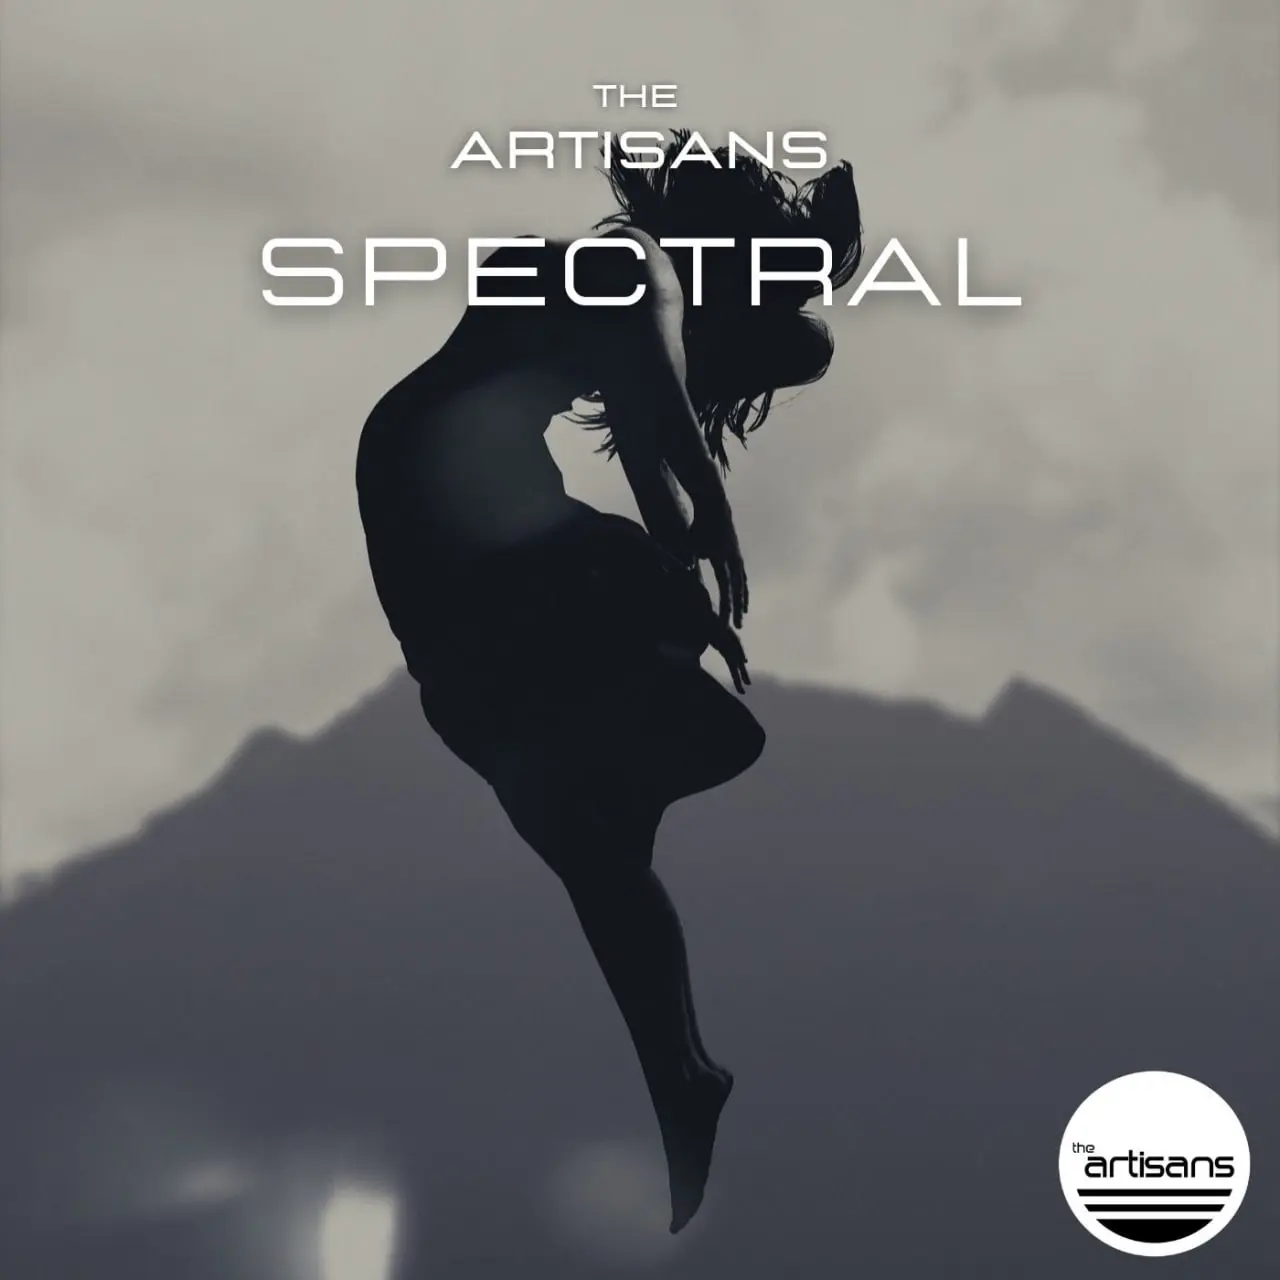 Spectral [Pop Rock beat | Halsey x G-Eazy]